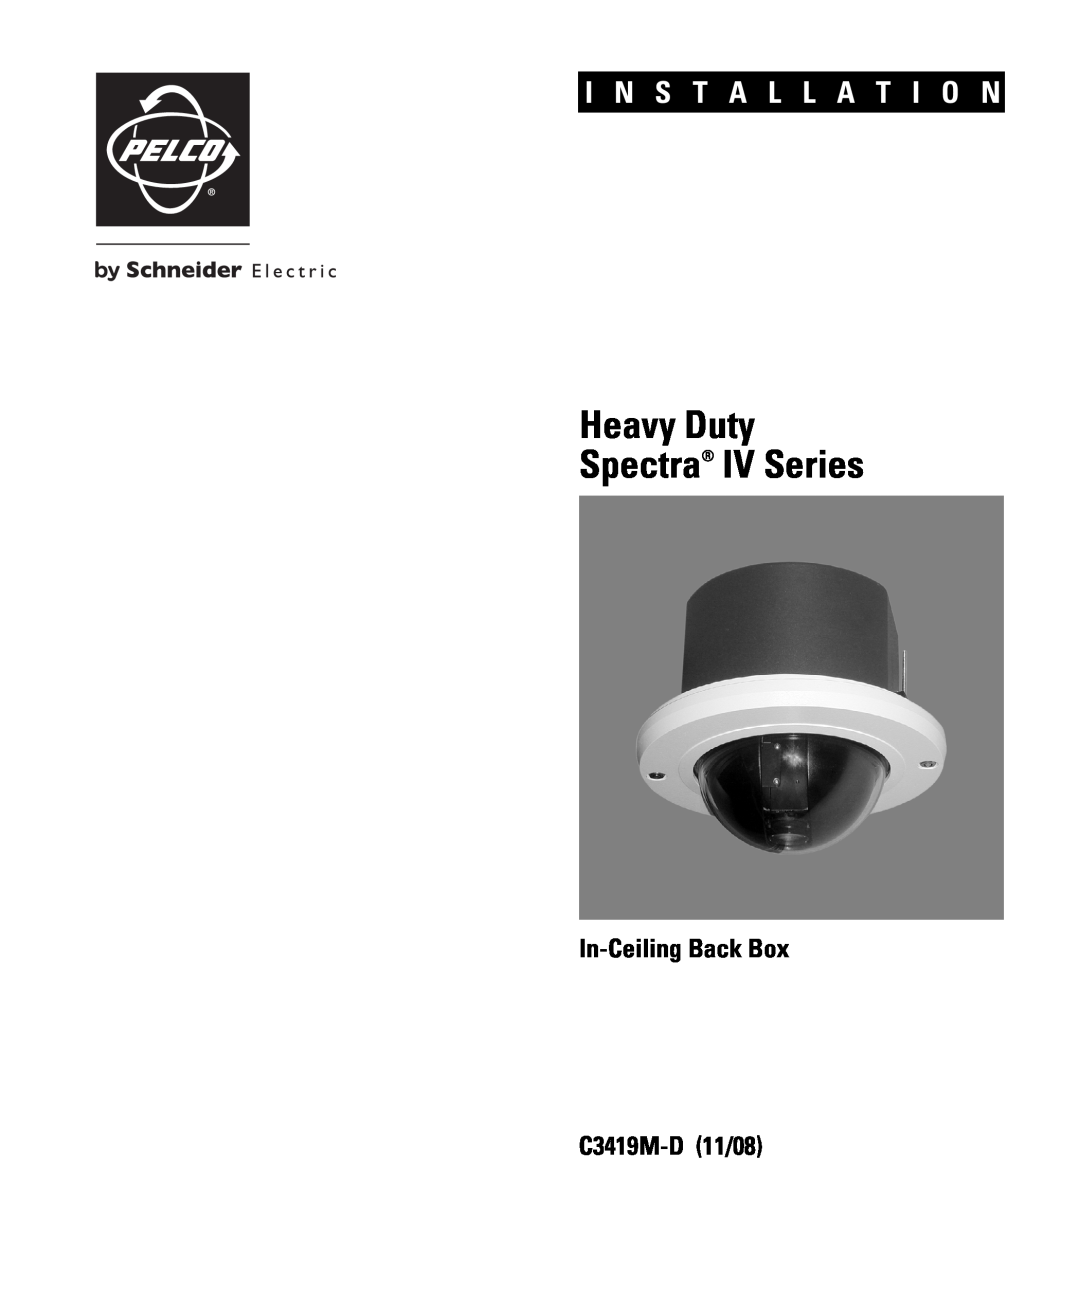 Schneider Electric C3419M-D (11/08) manual Heavy Duty Spectra IV Series, I N S T A L L A T I O N, In-Ceiling Back Box 